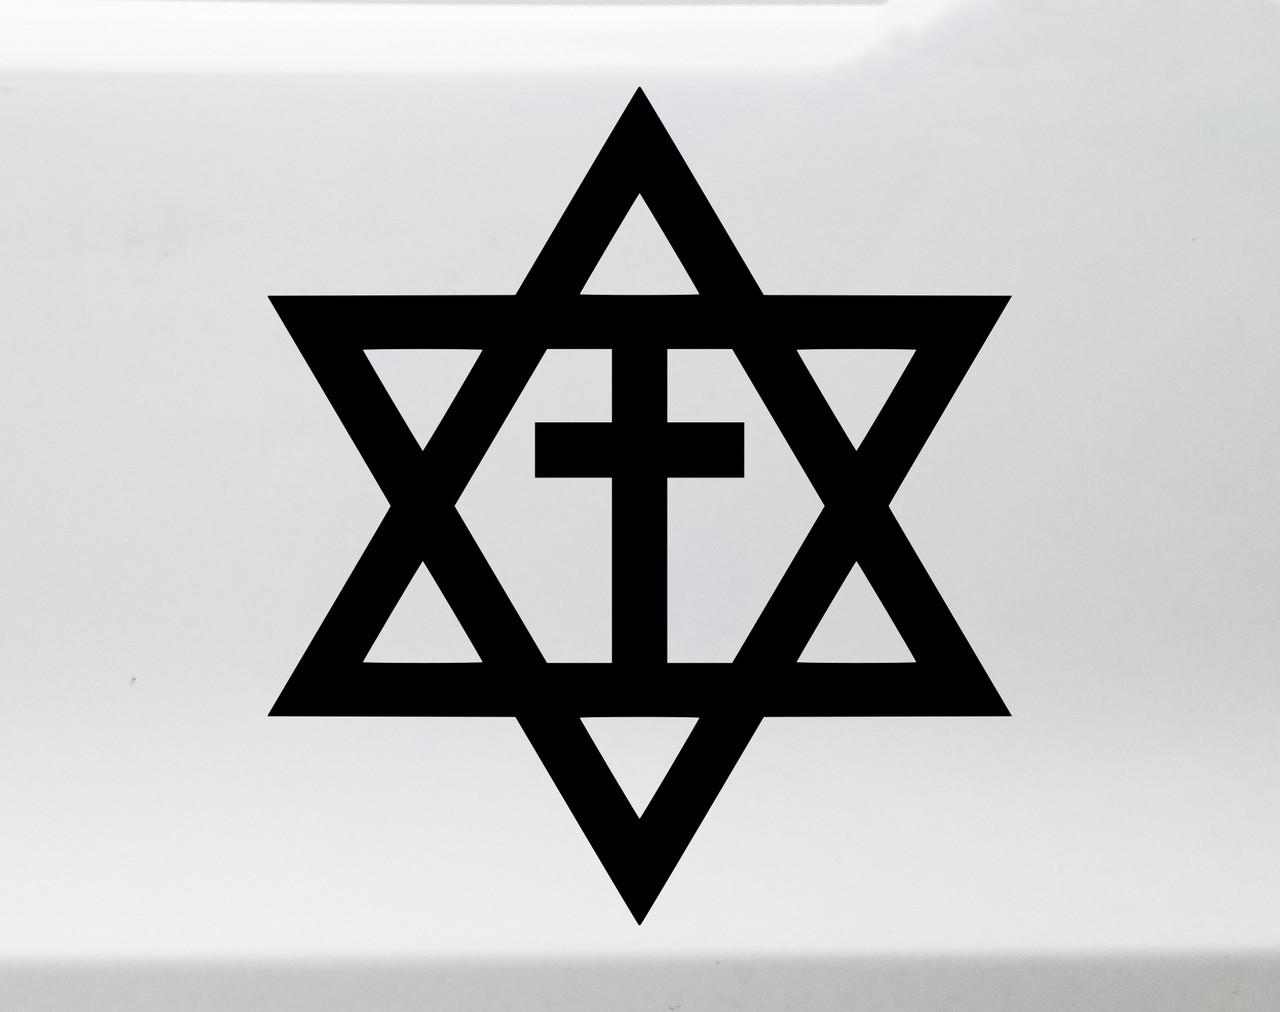 Messianic Cross Vinyl Decal - Judaism Star of David - Die Cut Sticker